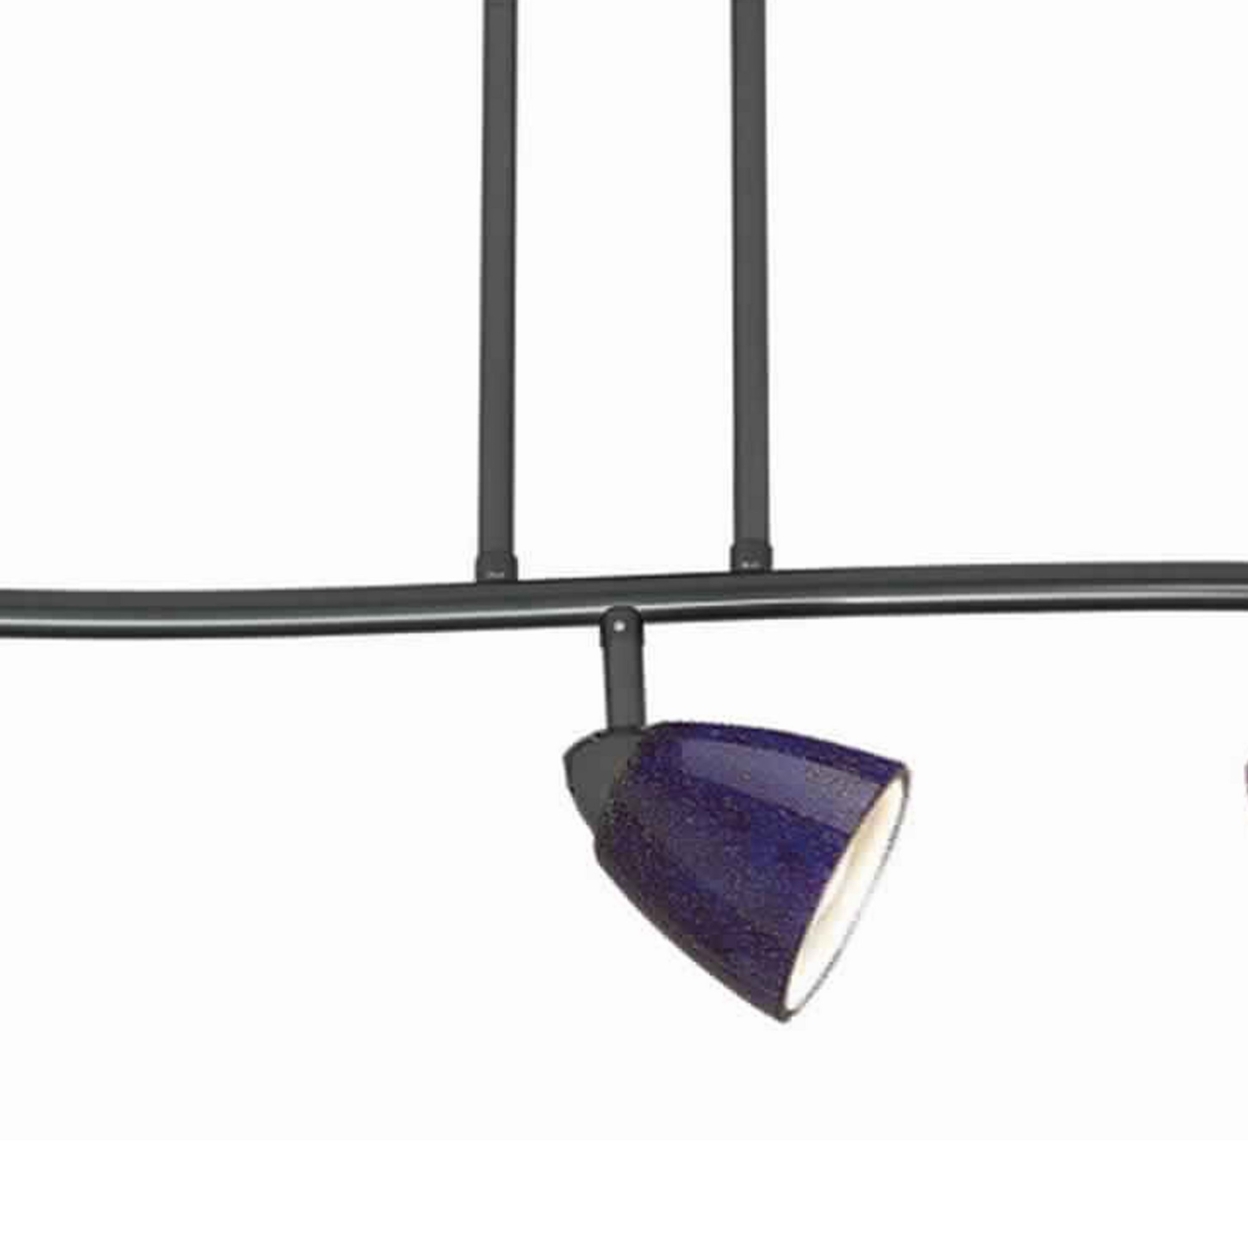 5 Light 120V Metal Track Light Fixture With Glass Shade, Black And Blue- Saltoro Sherpi